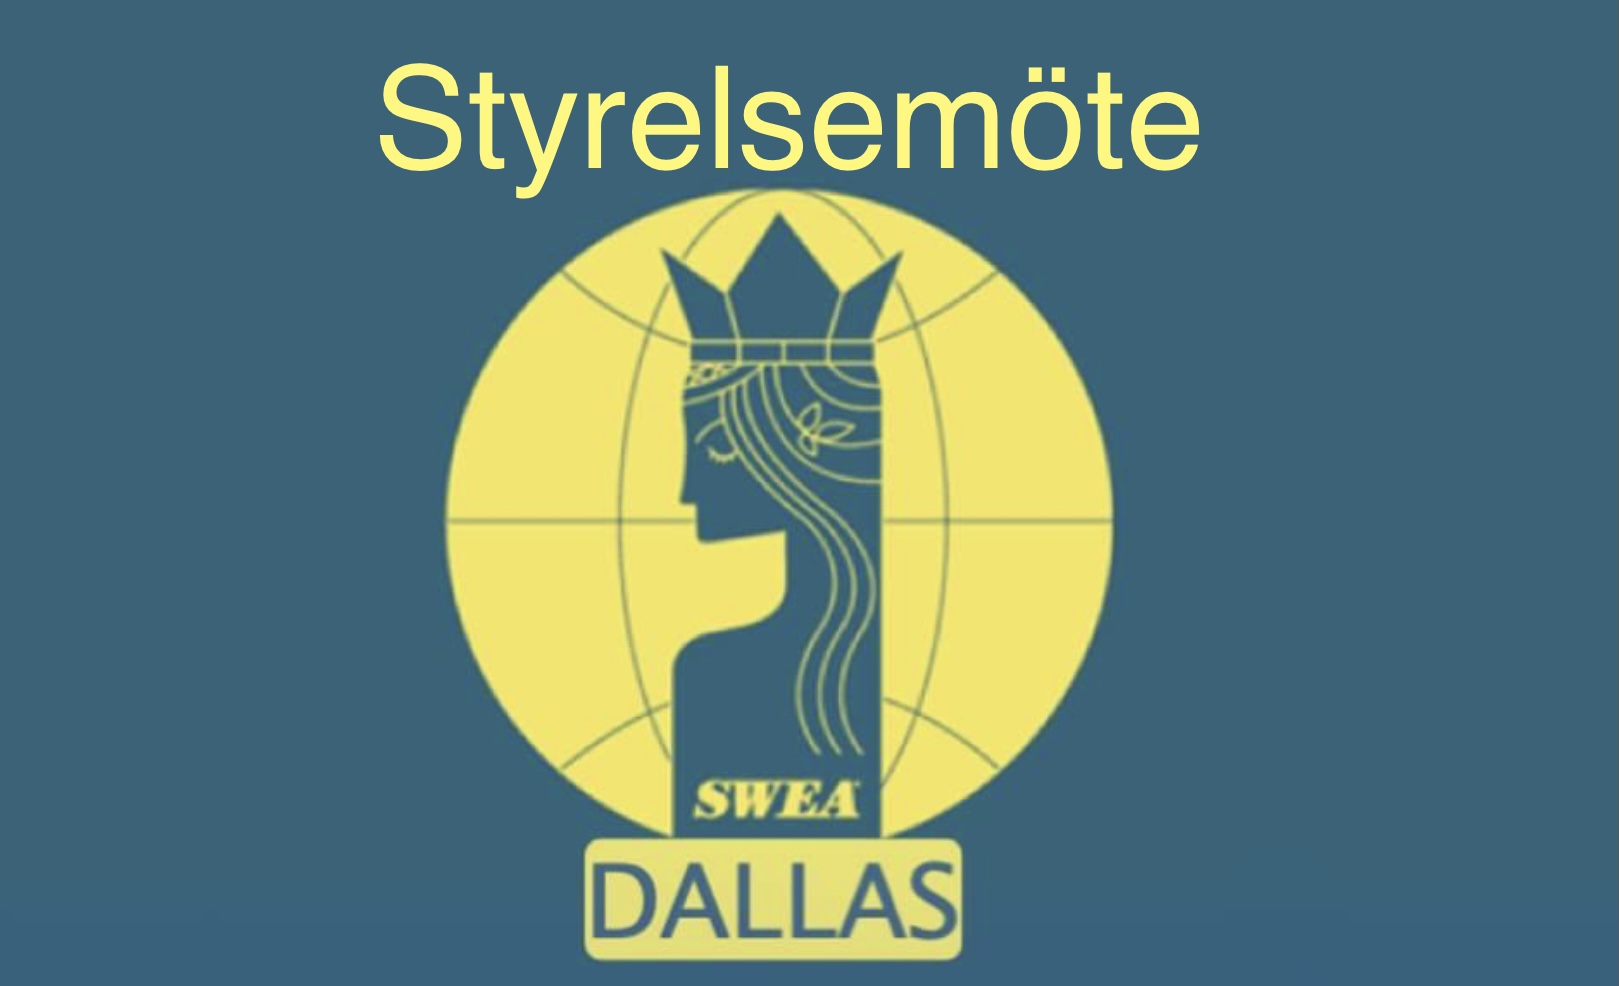 SWEA Dallas Styrelsemöte - 1 mars